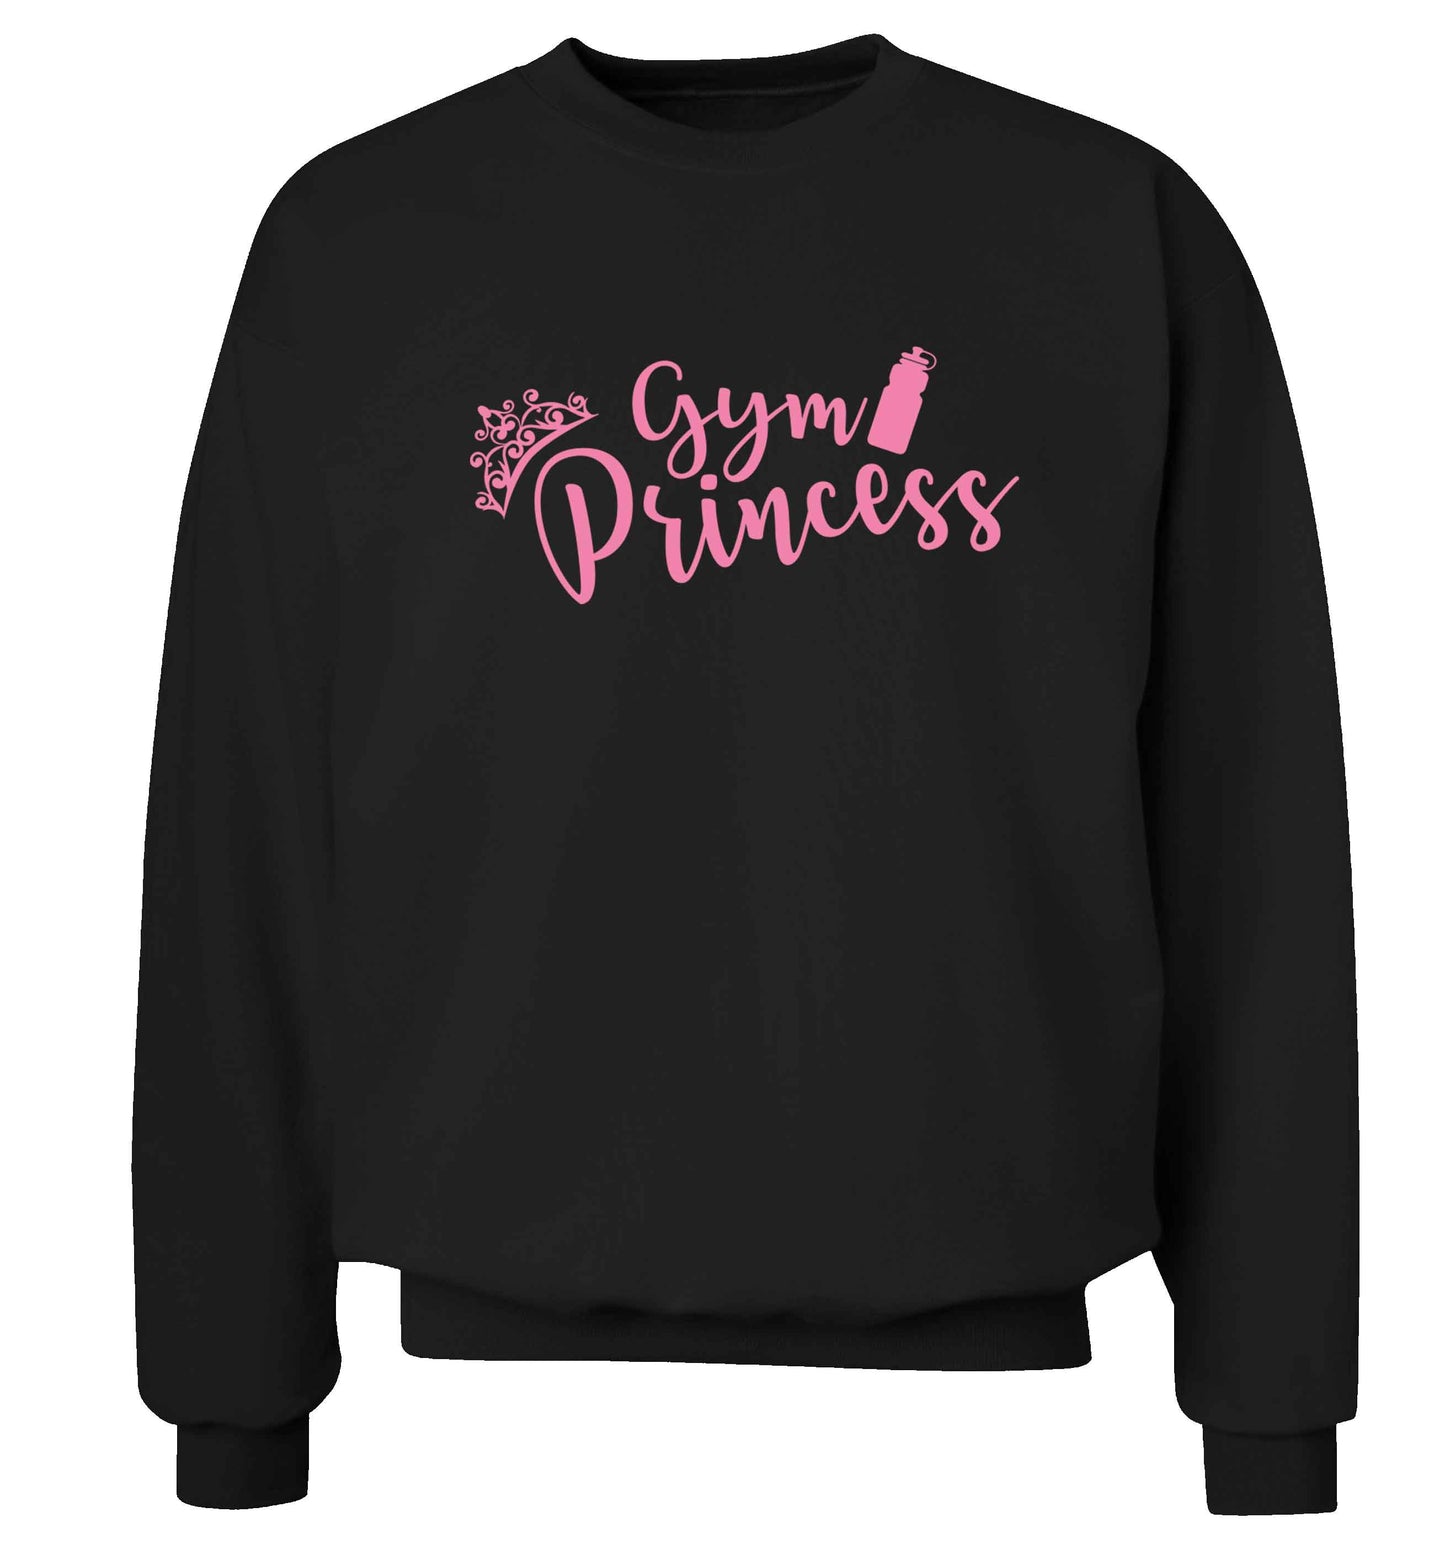 Gym princess Adult's unisex black Sweater 2XL